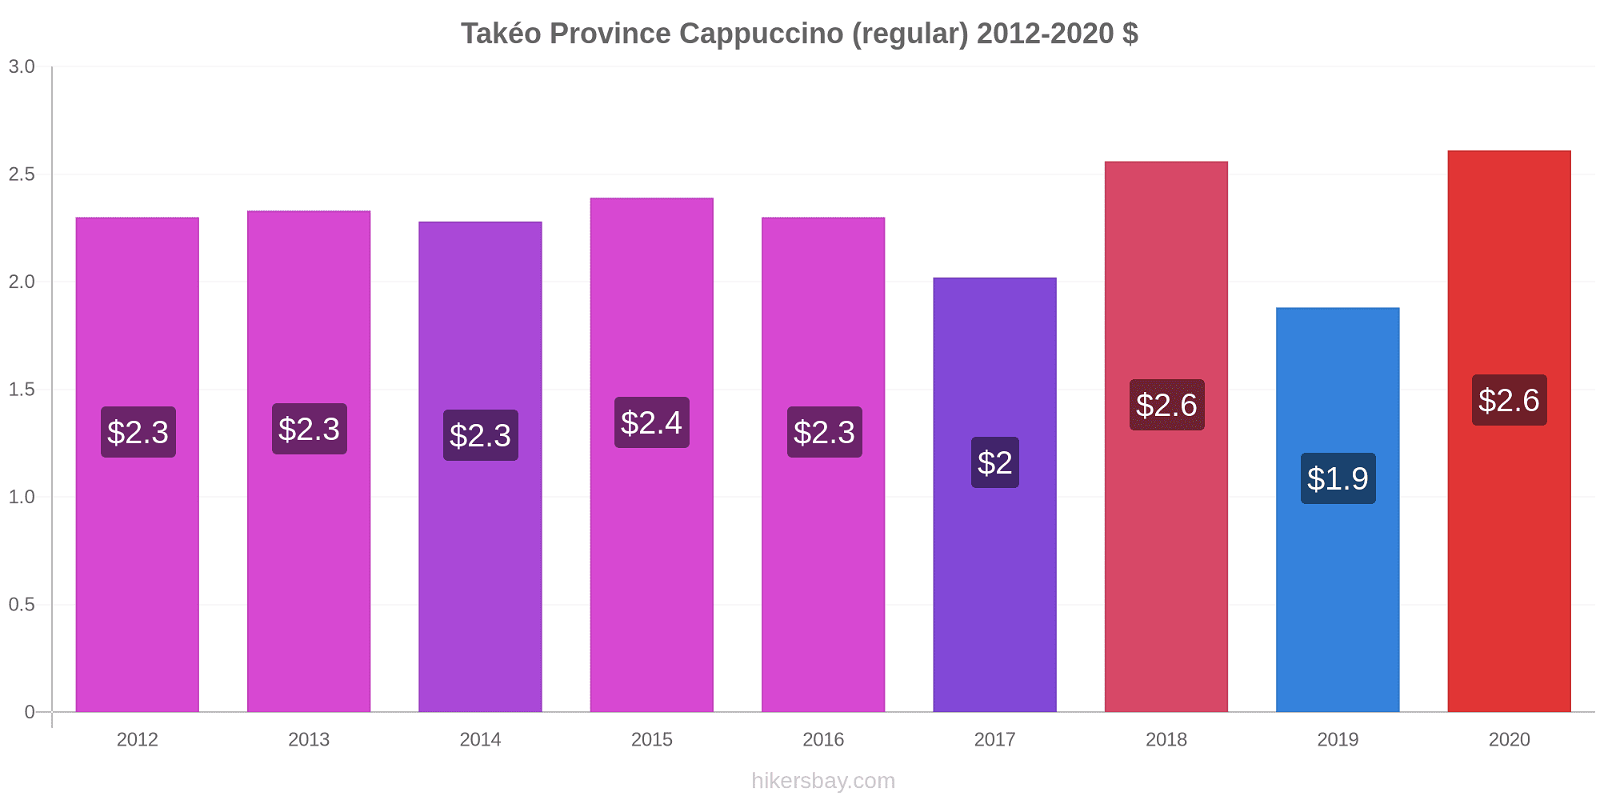 Takéo Province price changes Cappuccino (regular) hikersbay.com